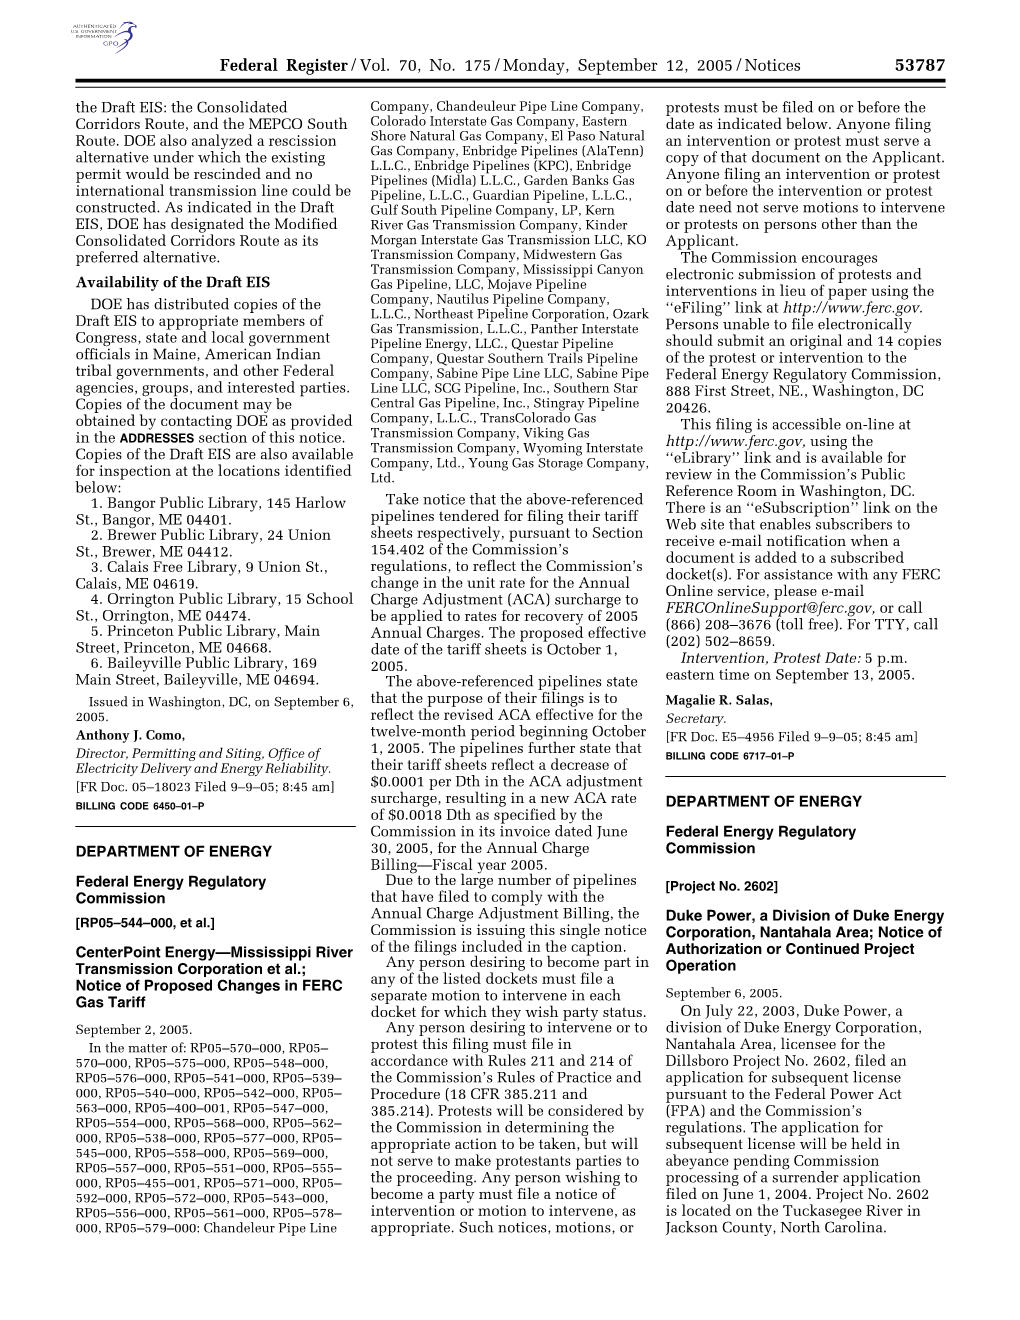 Federal Register/Vol. 70, No. 175/Monday, September 12, 2005